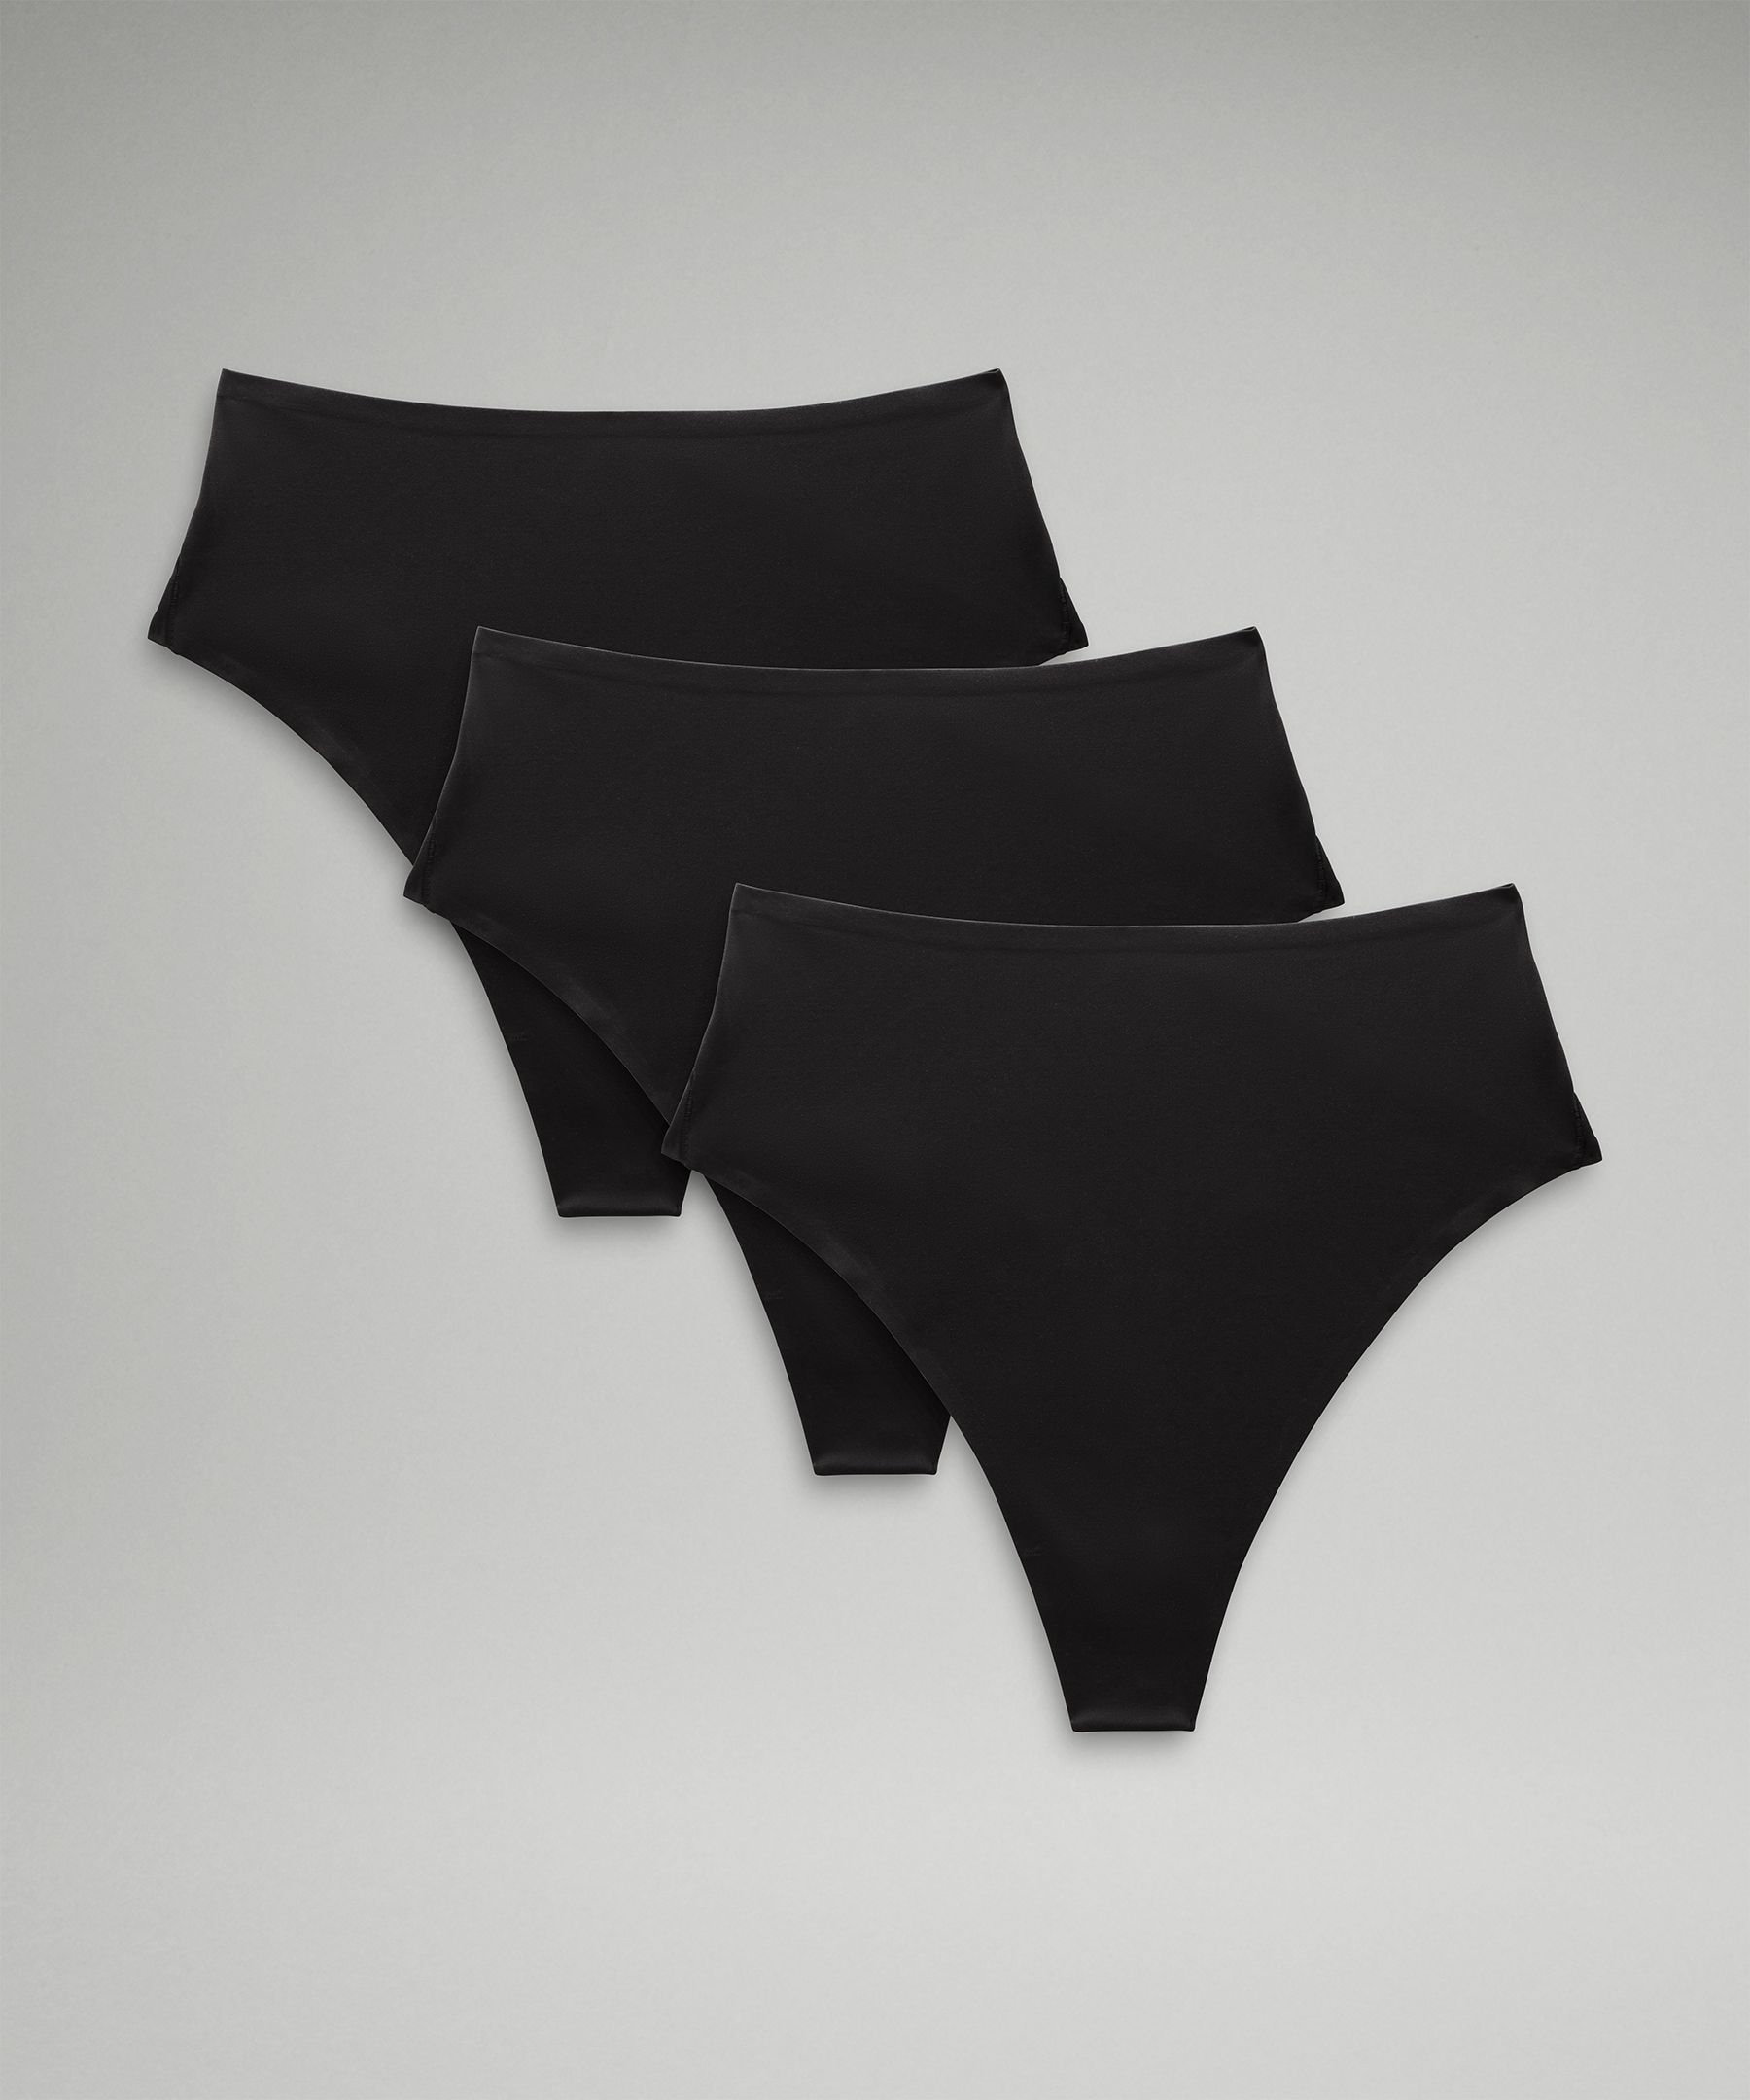 Lululemon Smooth Seamless Thong 3 Pack NWT Underwear XL BLK/MYSH/DKRD Color